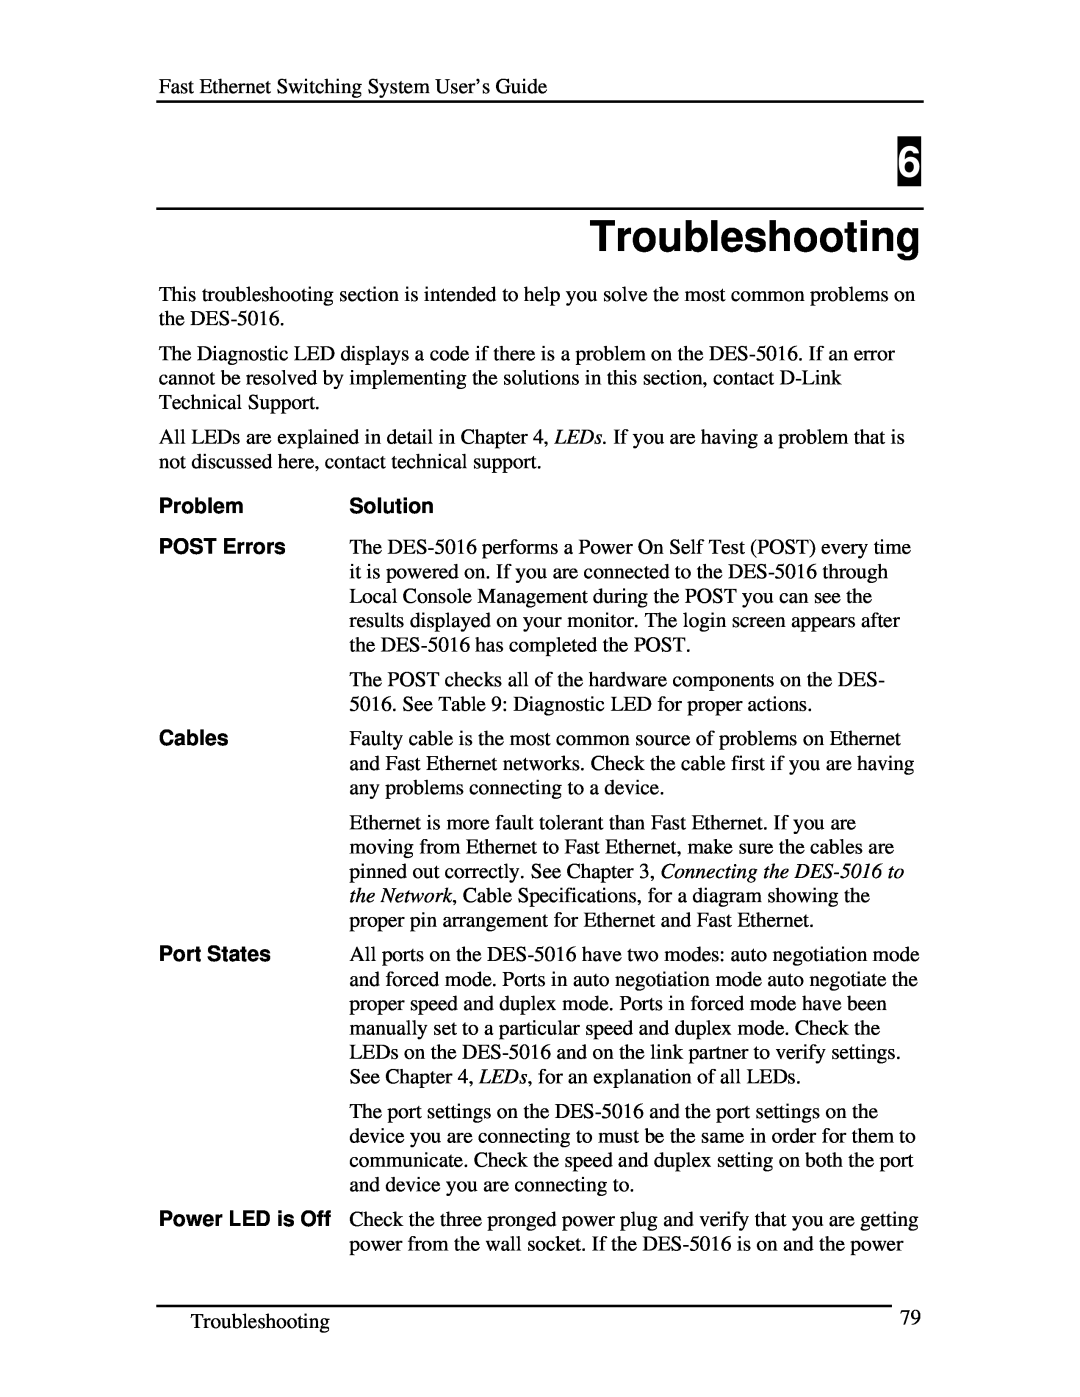 D-Link DES-5016 manual Troubleshooting, Problem, Solution, POST Errors, Cables, Port States 